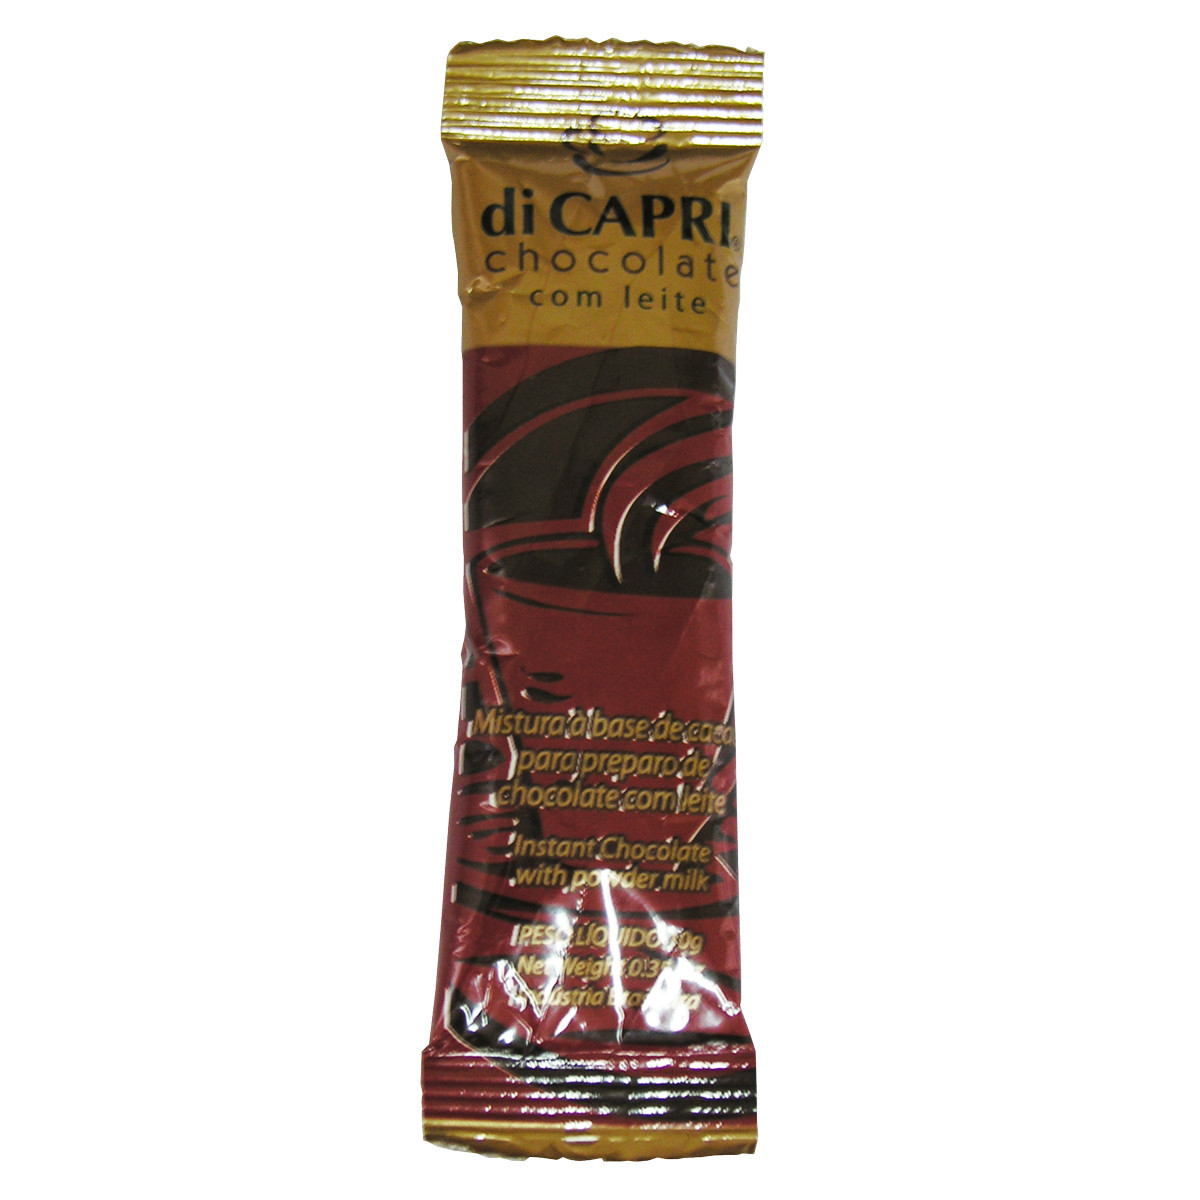 Cappuccino Chocolate com leite di Capri - 100 unidades